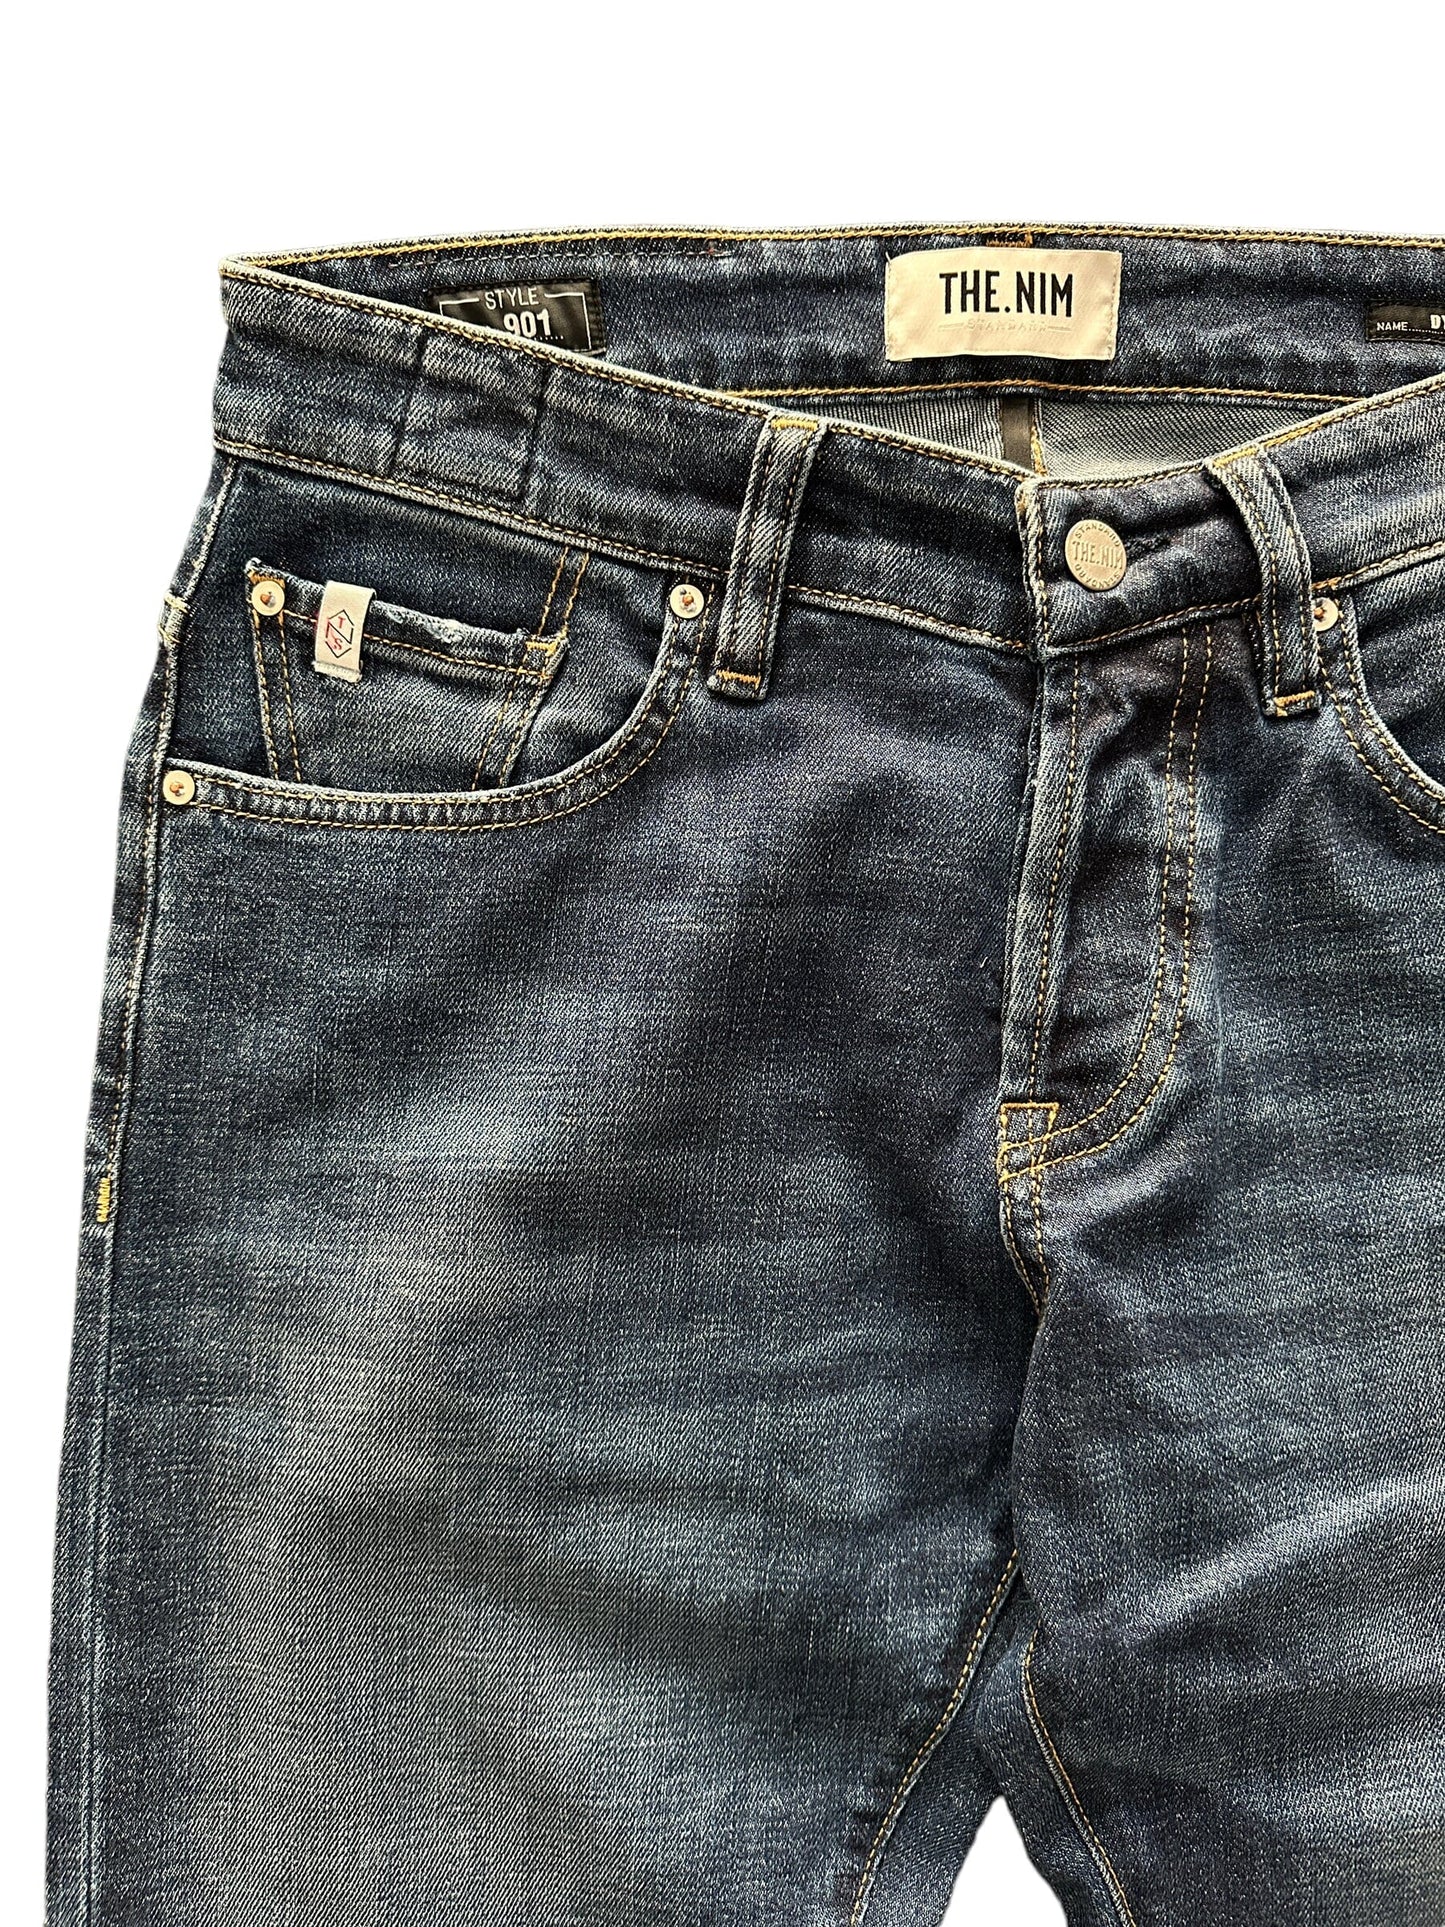 THE.NIM - Jeans Dylan Slim fit W704 Mdb Jeans The.Nim 